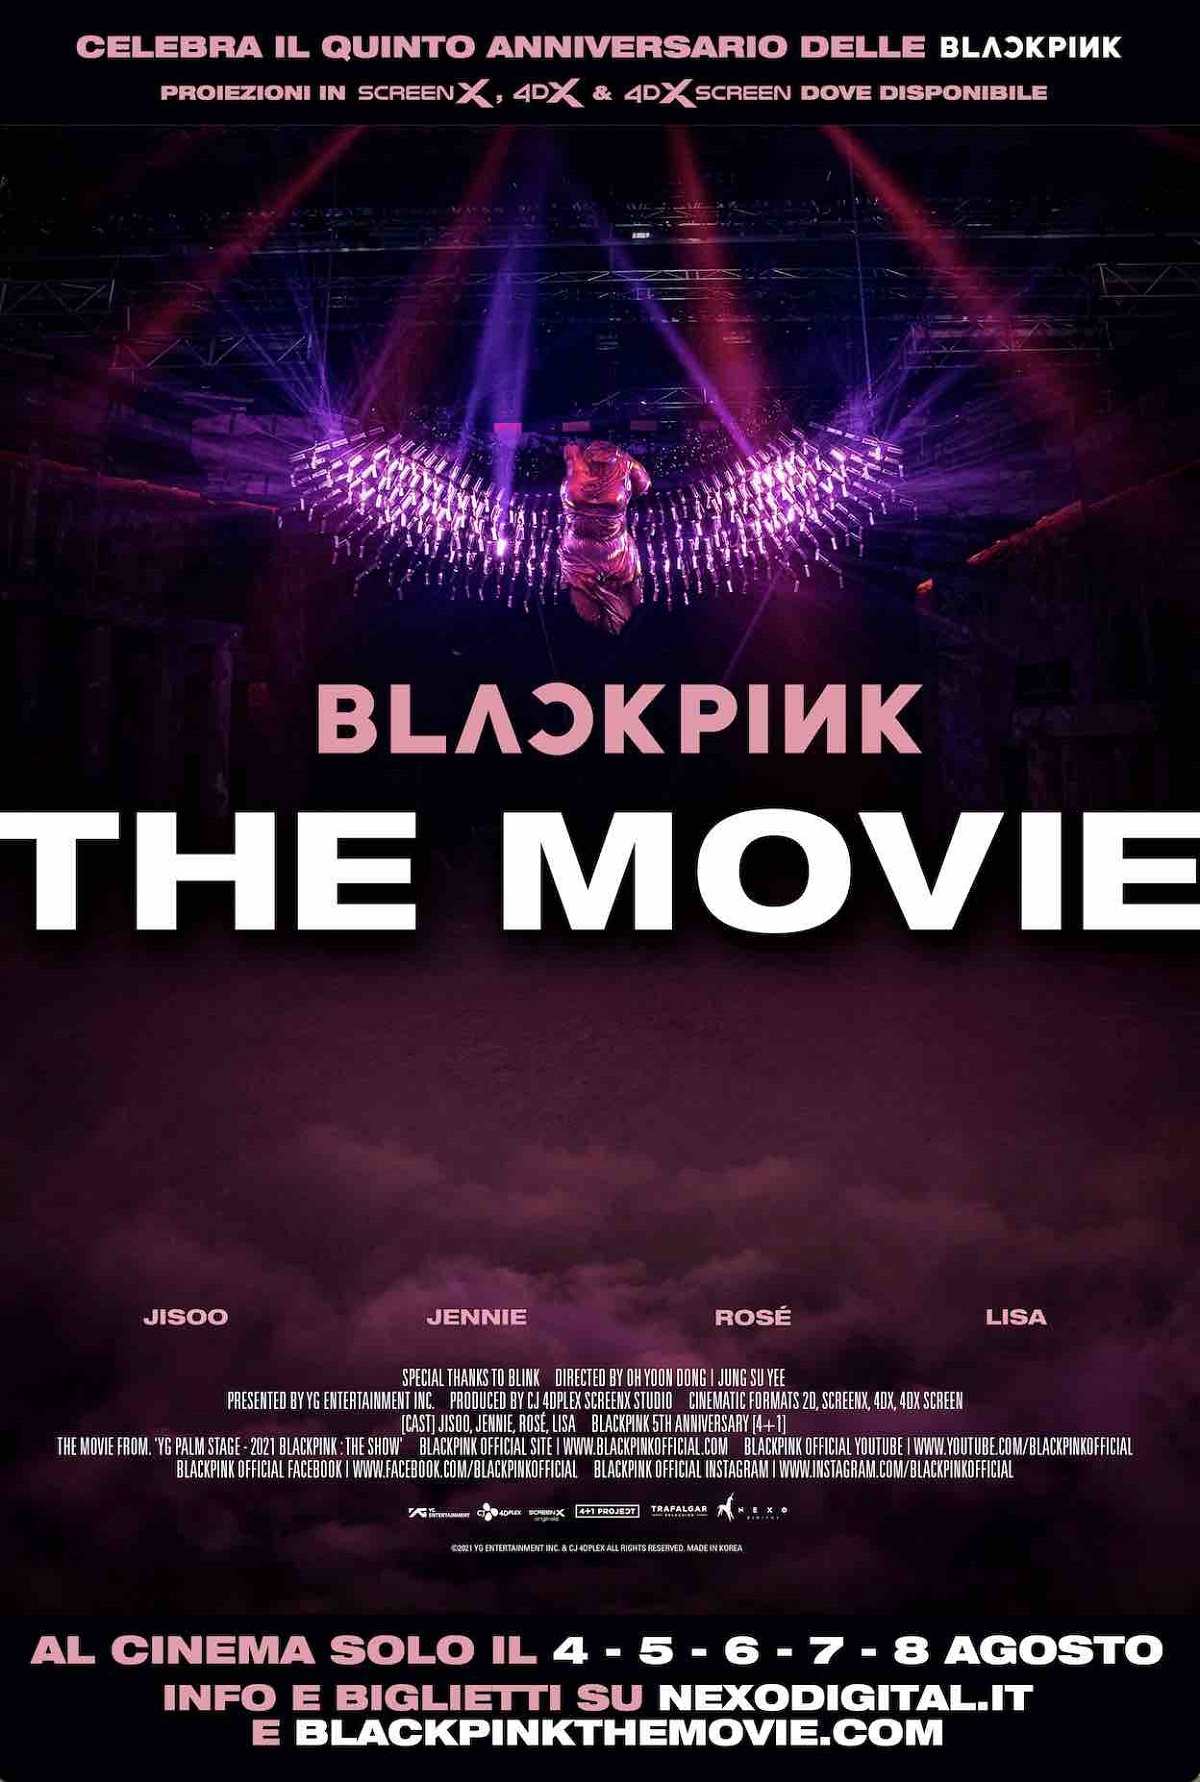 "Blackpink The Movie": al cinema dal 4 all'8 agosto